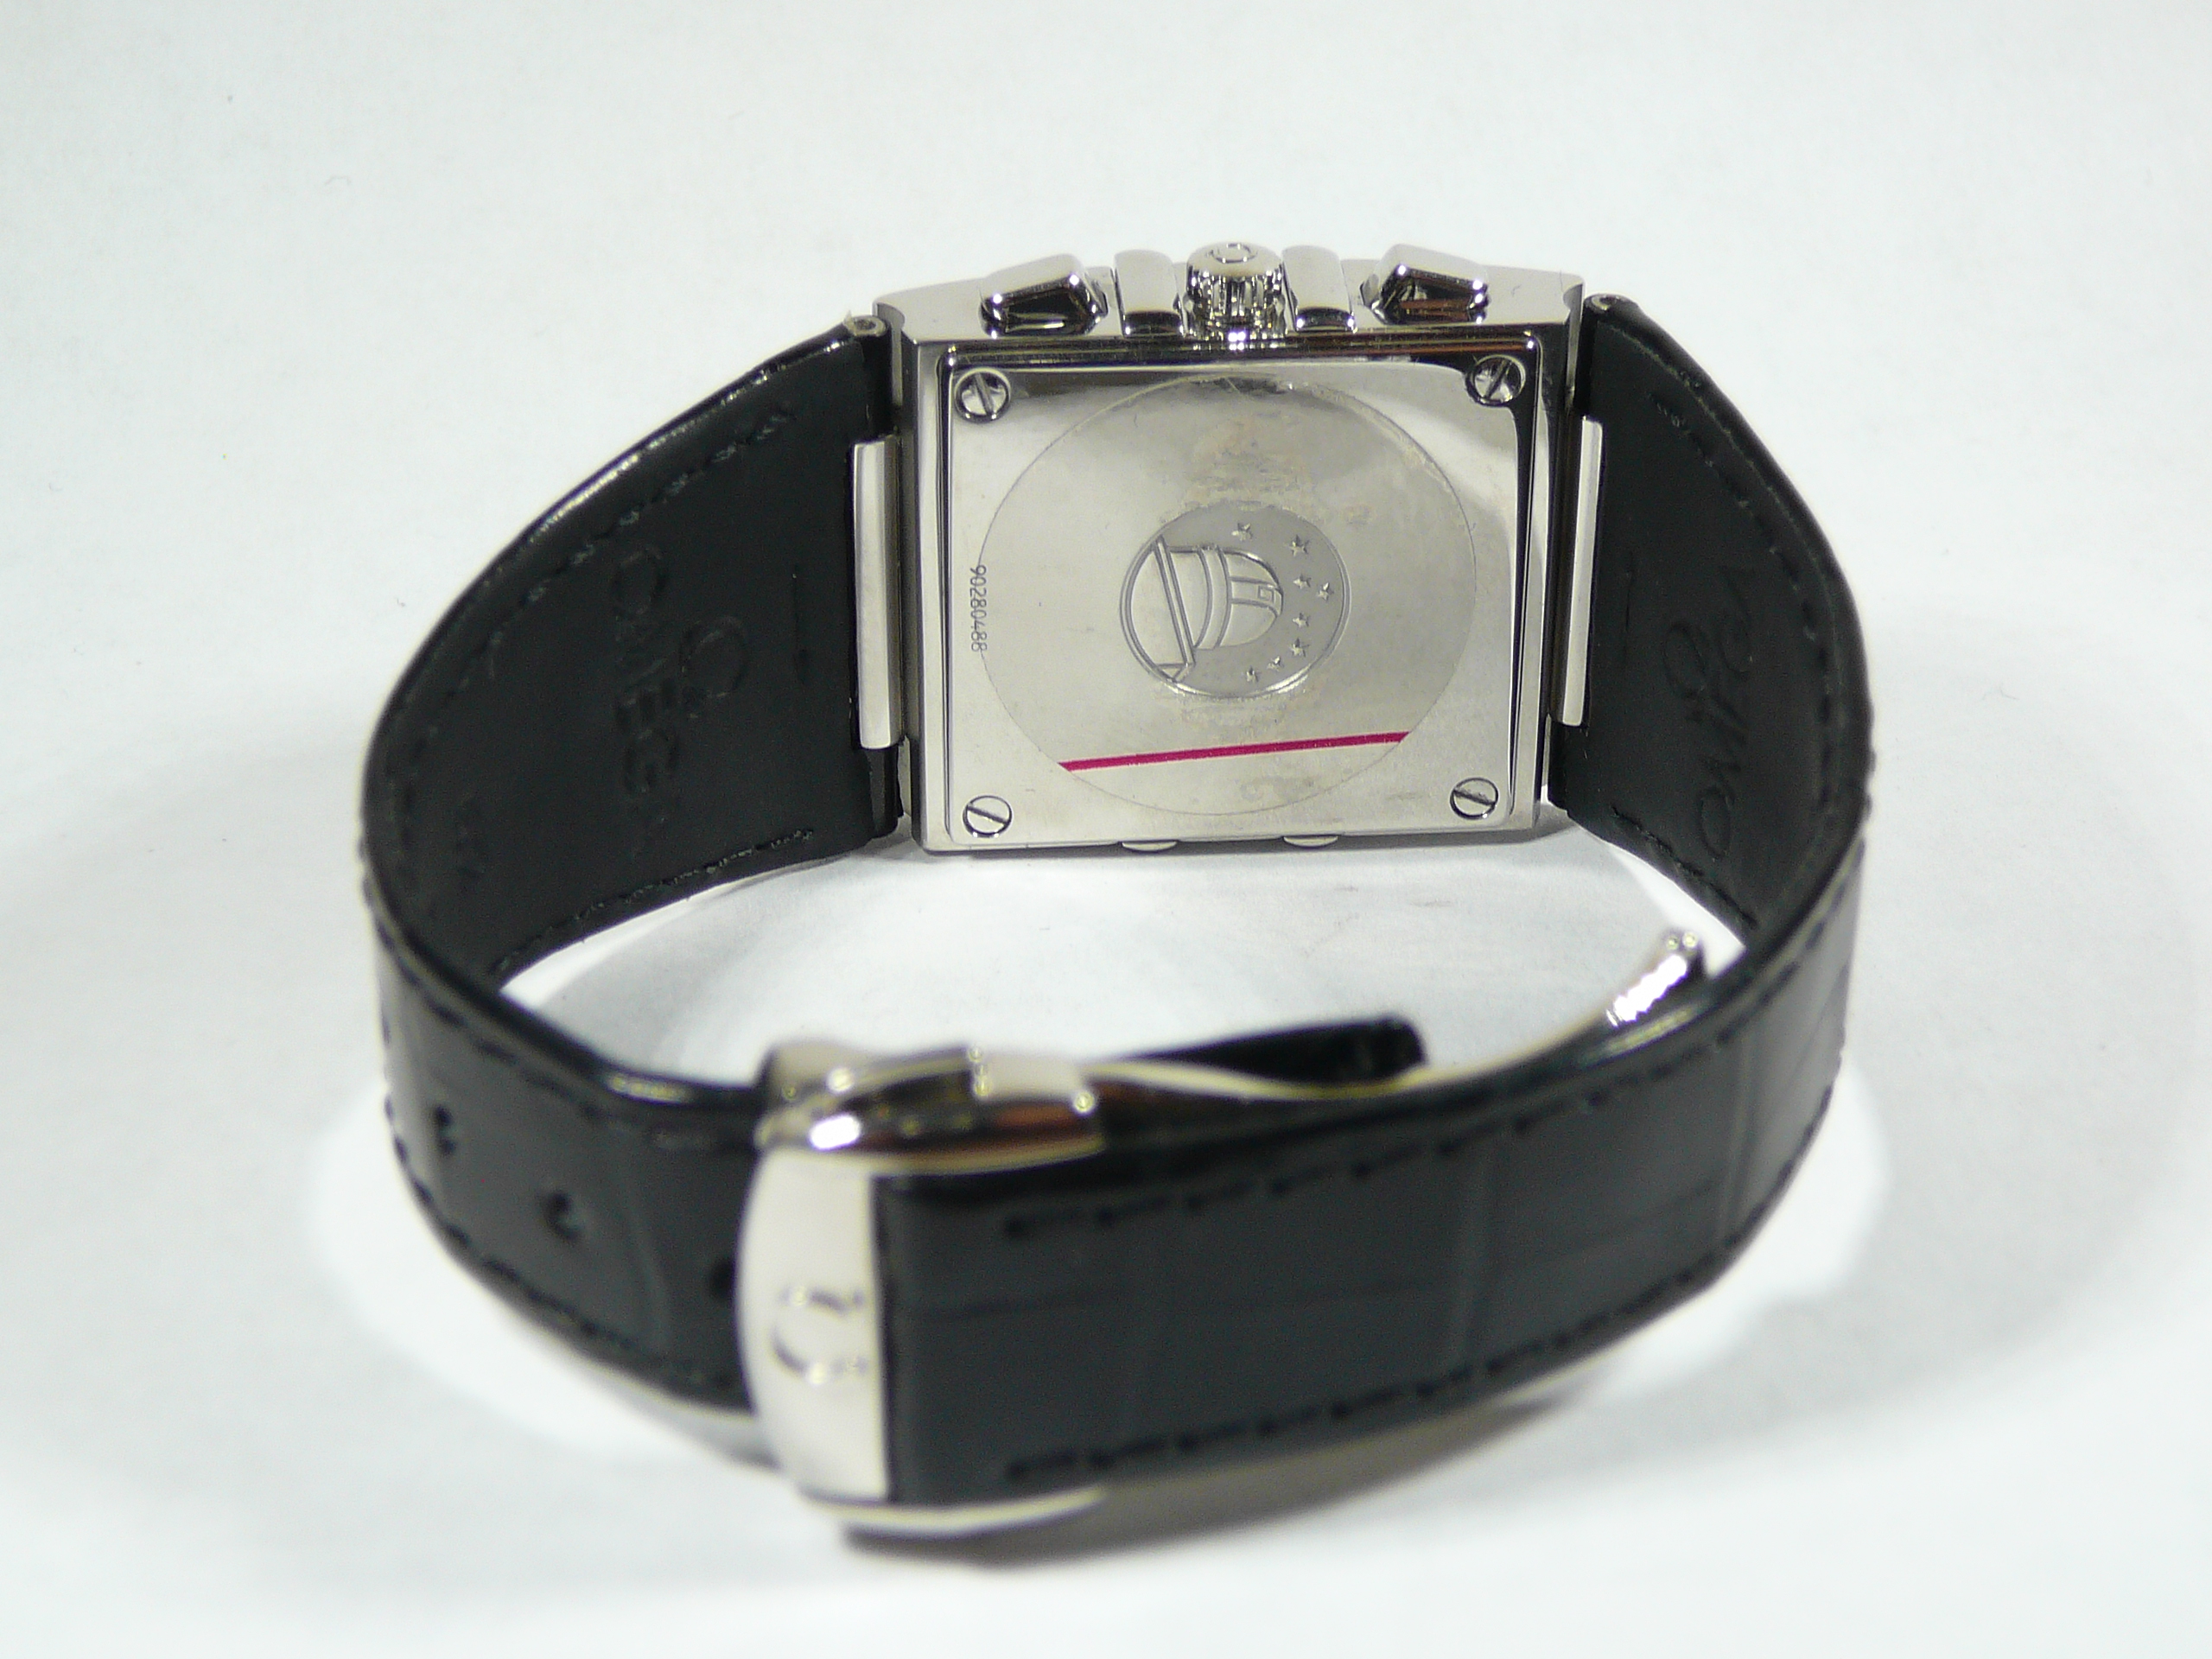 Ladies Omega Wrist Watch - Image 4 of 4